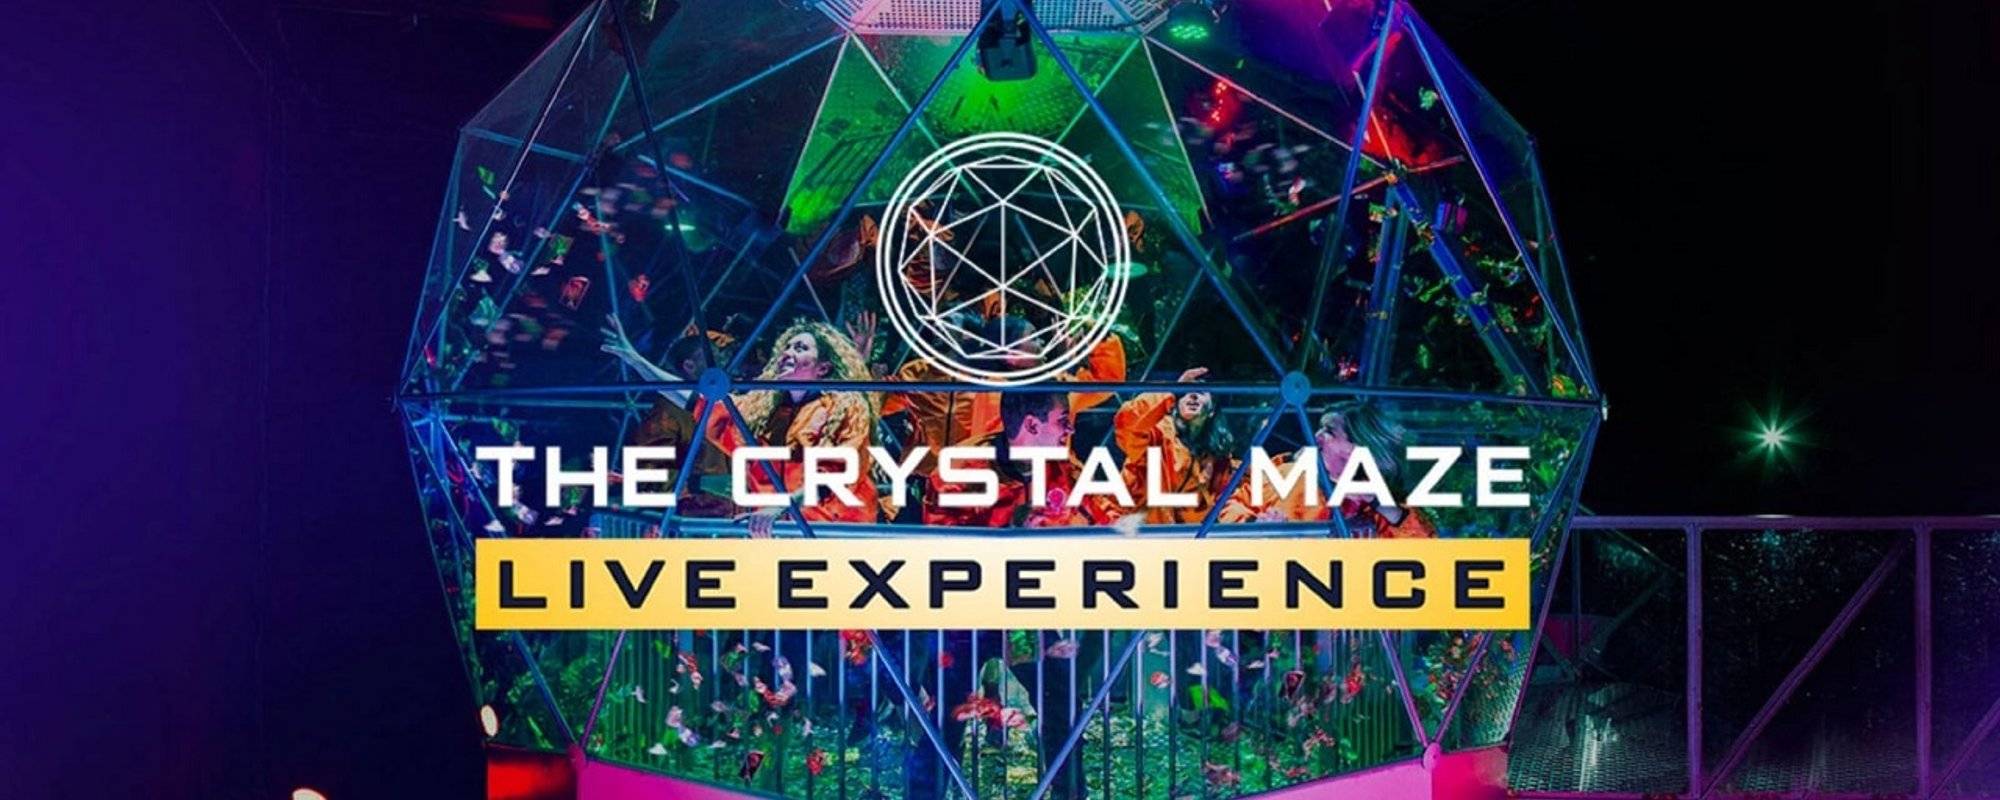 Wedding Crashers take on The Crystal Maze Live Experience